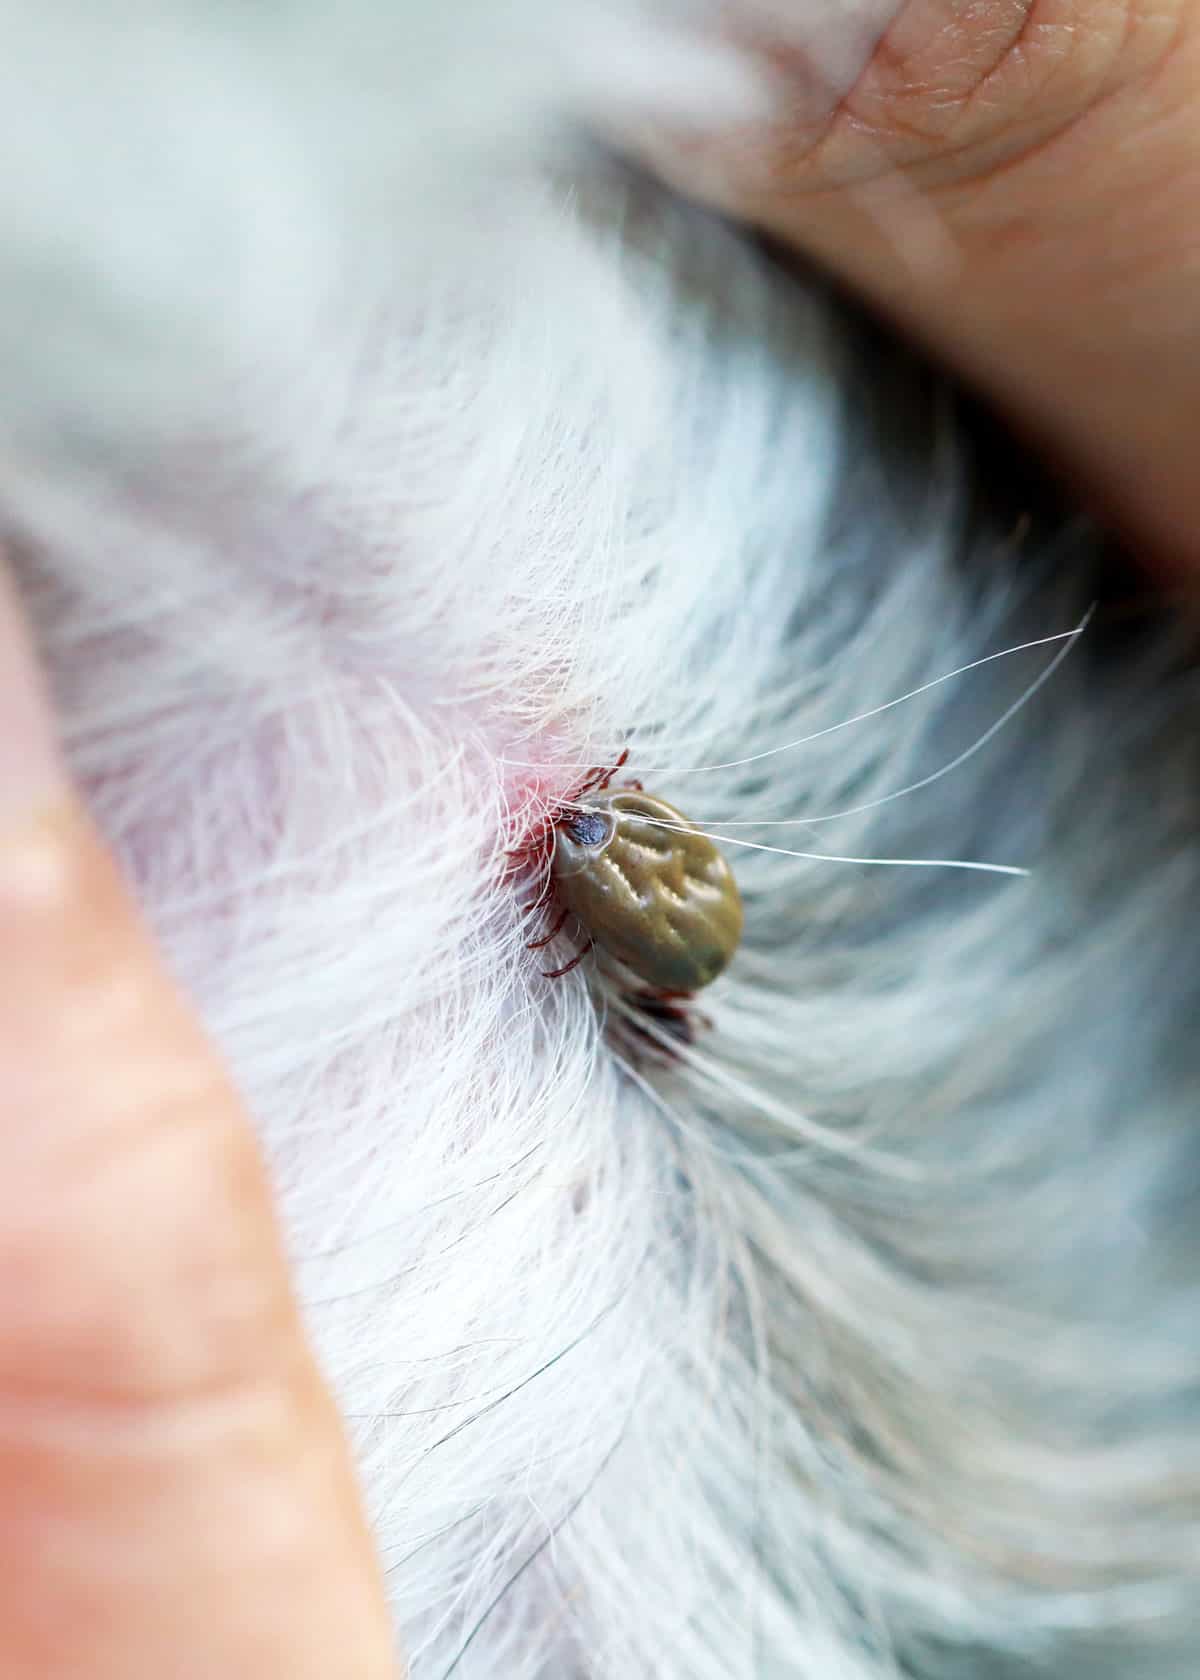 How do I kill a tick on my dog?